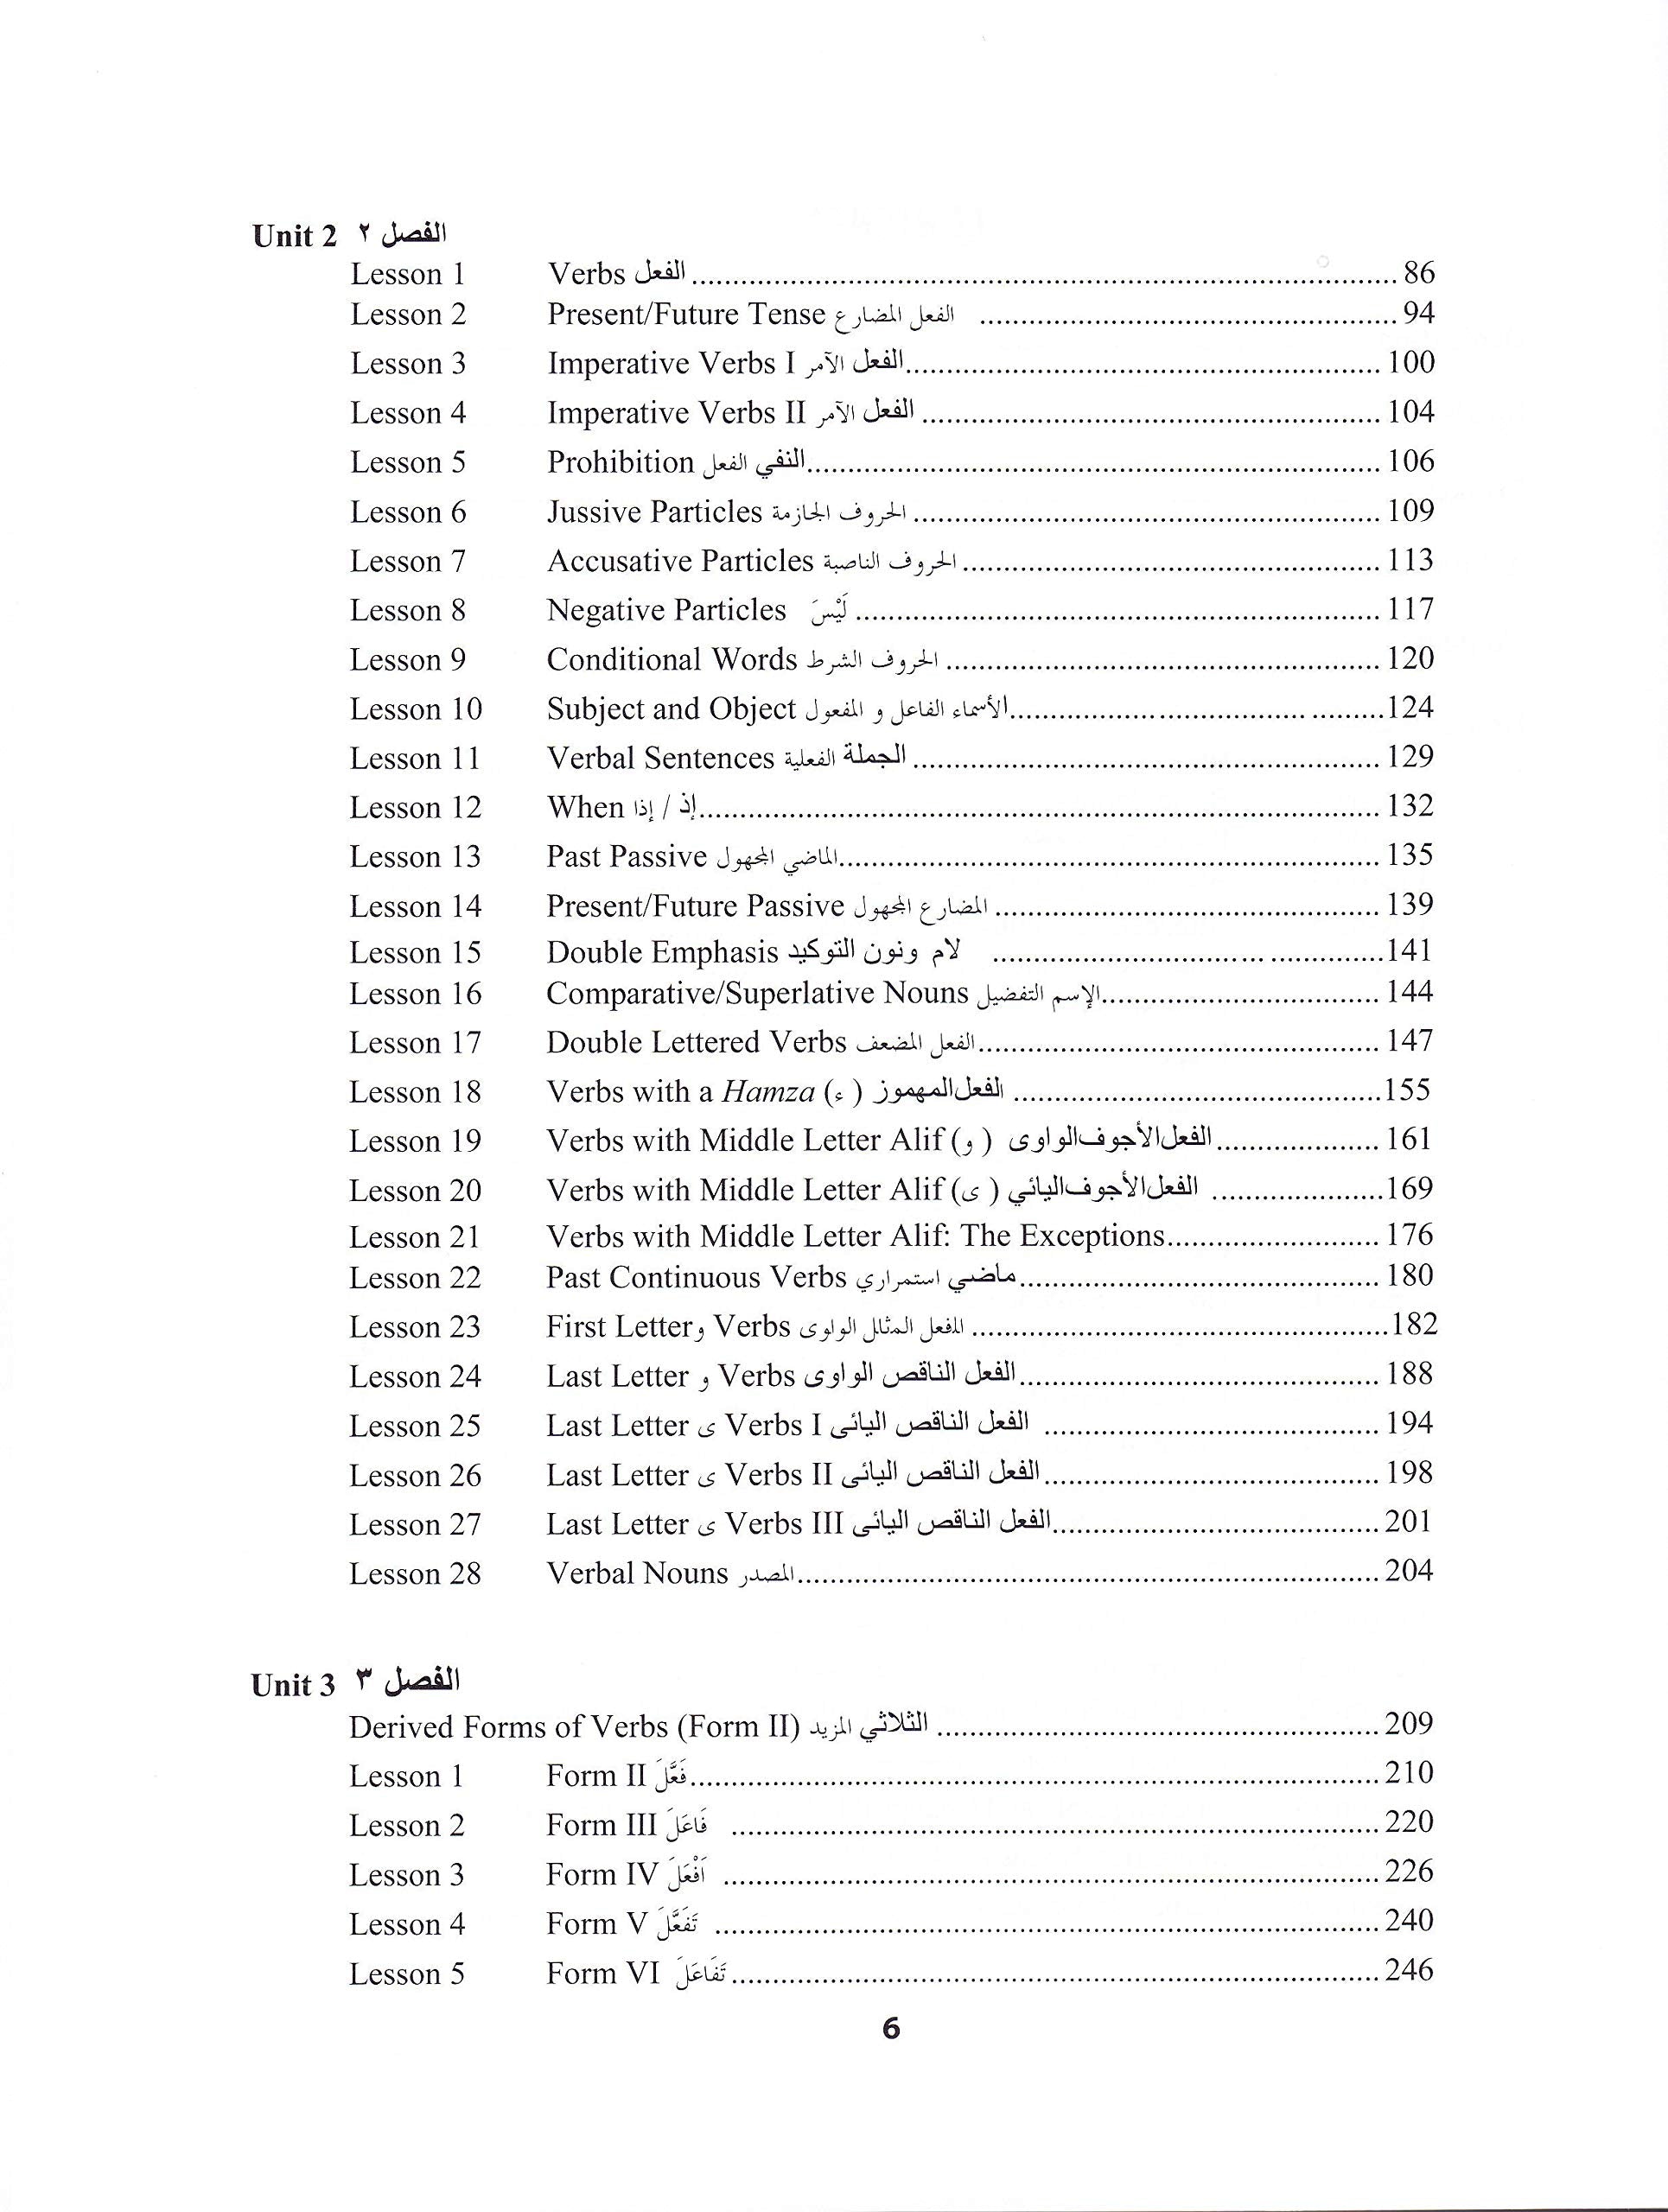 Qur'anic Language Made Easy (Revised)